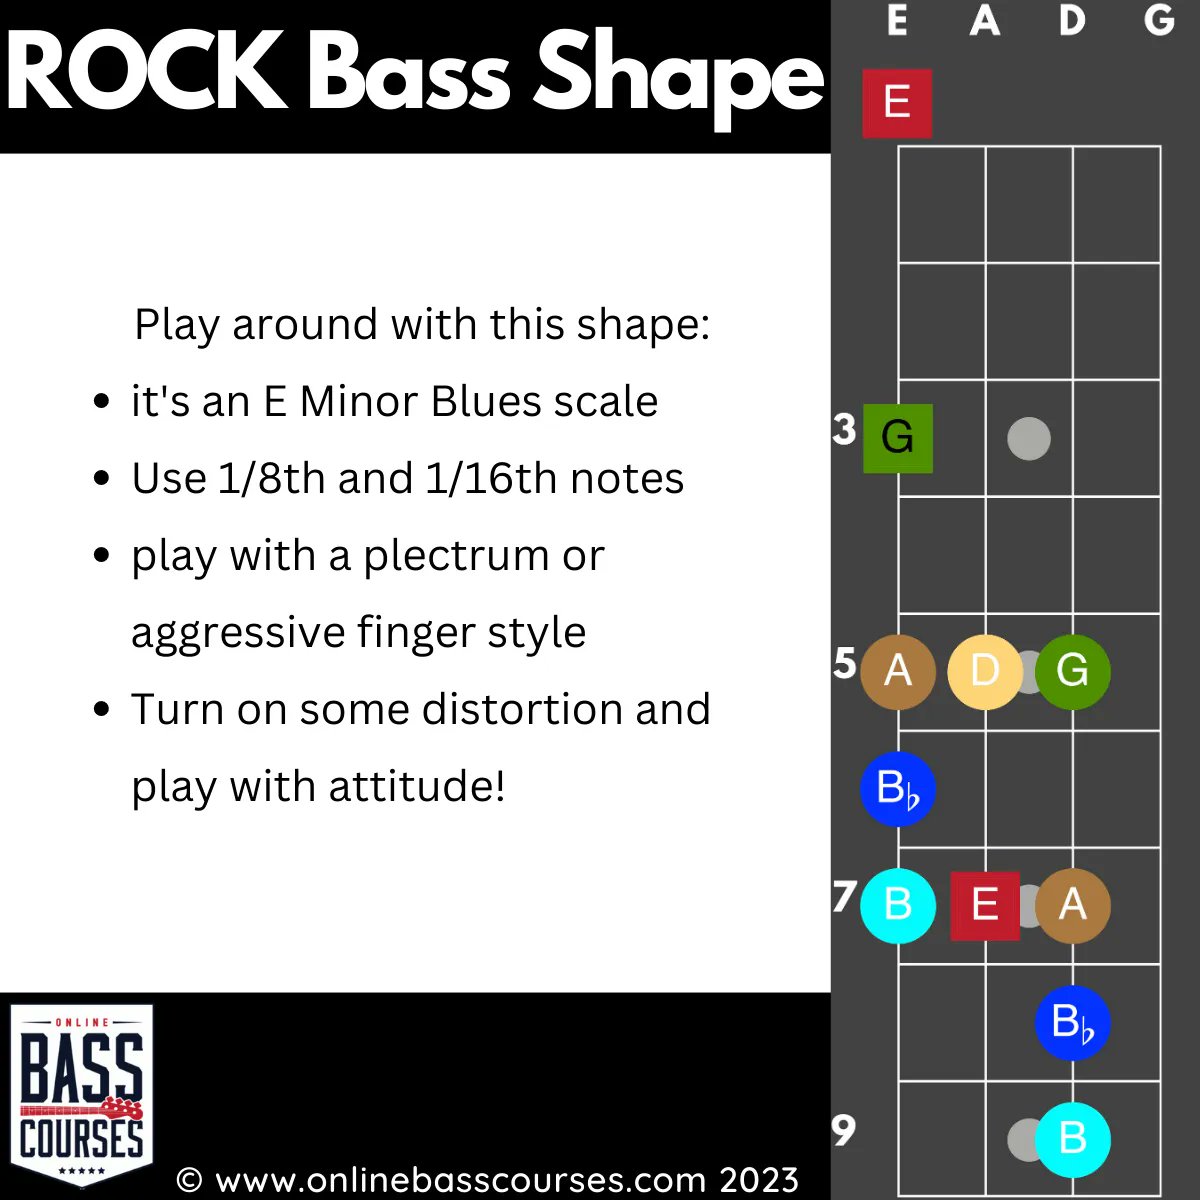 Here's a great shape for your rock bass riffs.

#rockbass